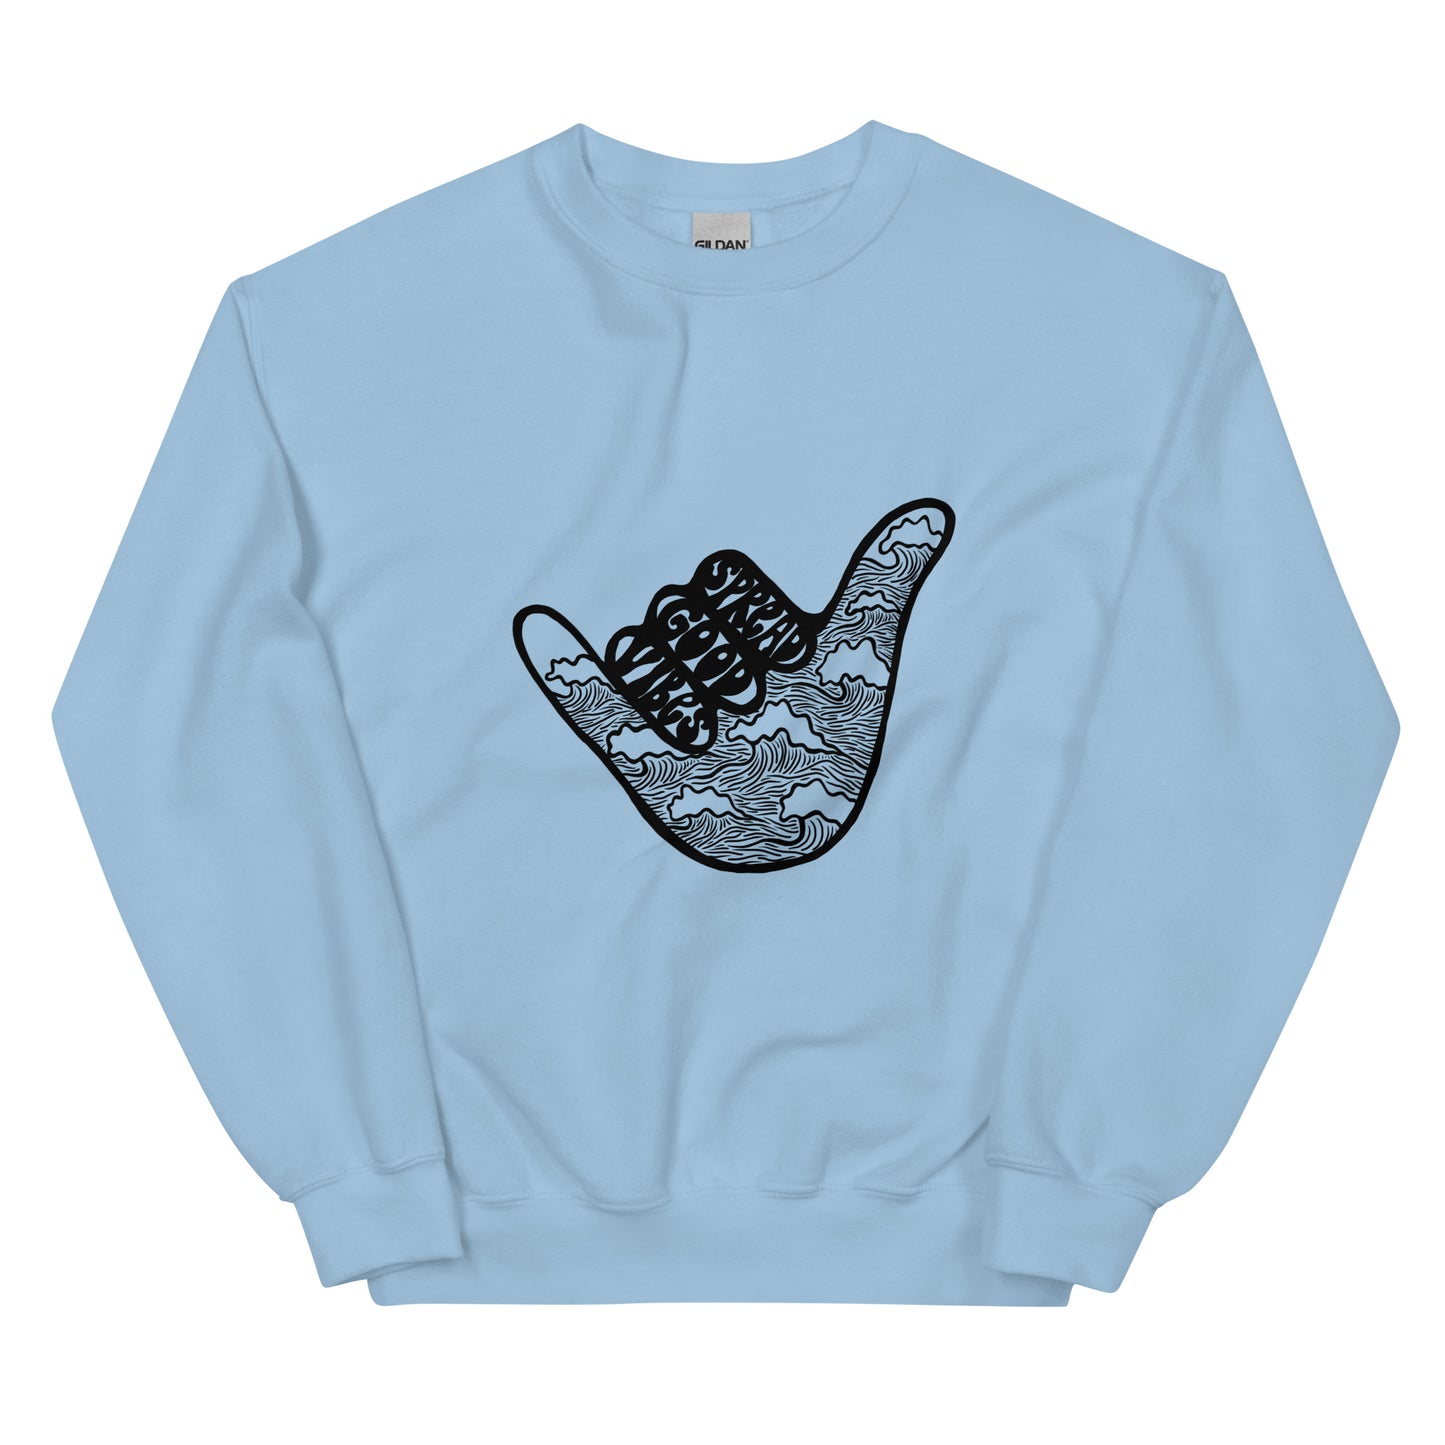 spread good vibes sweatshirt (design on front)